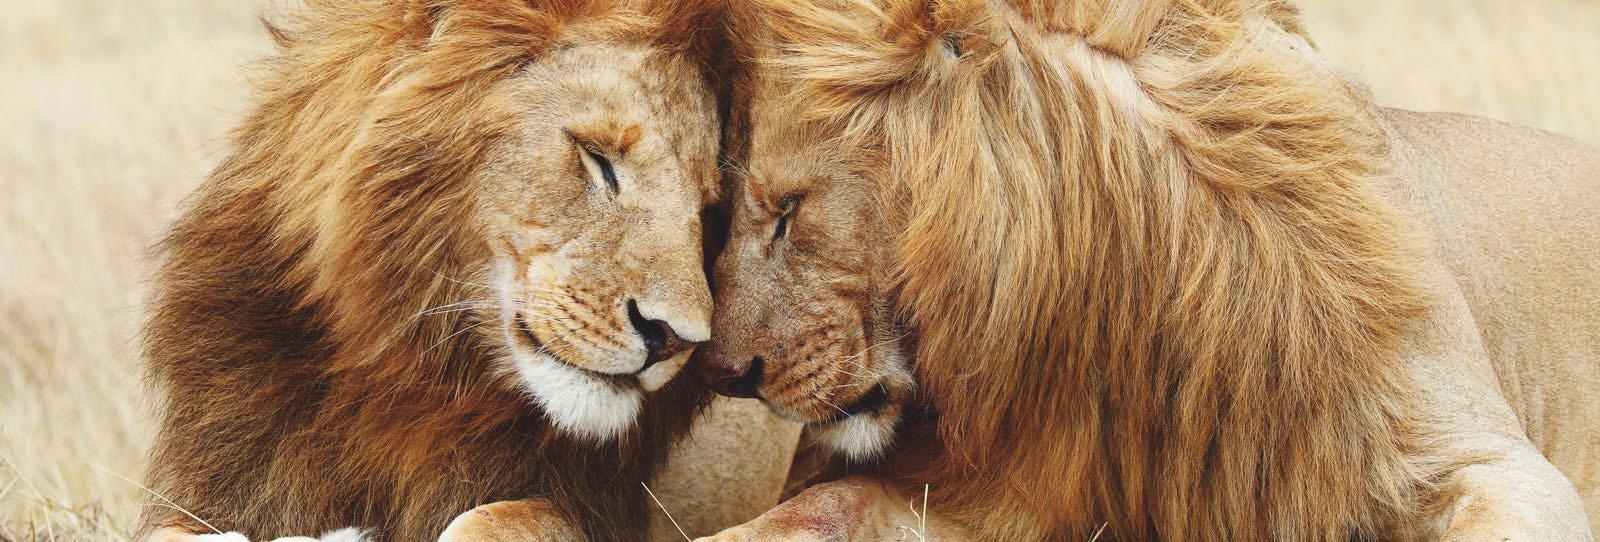 Wandbild »Löwenliebe«